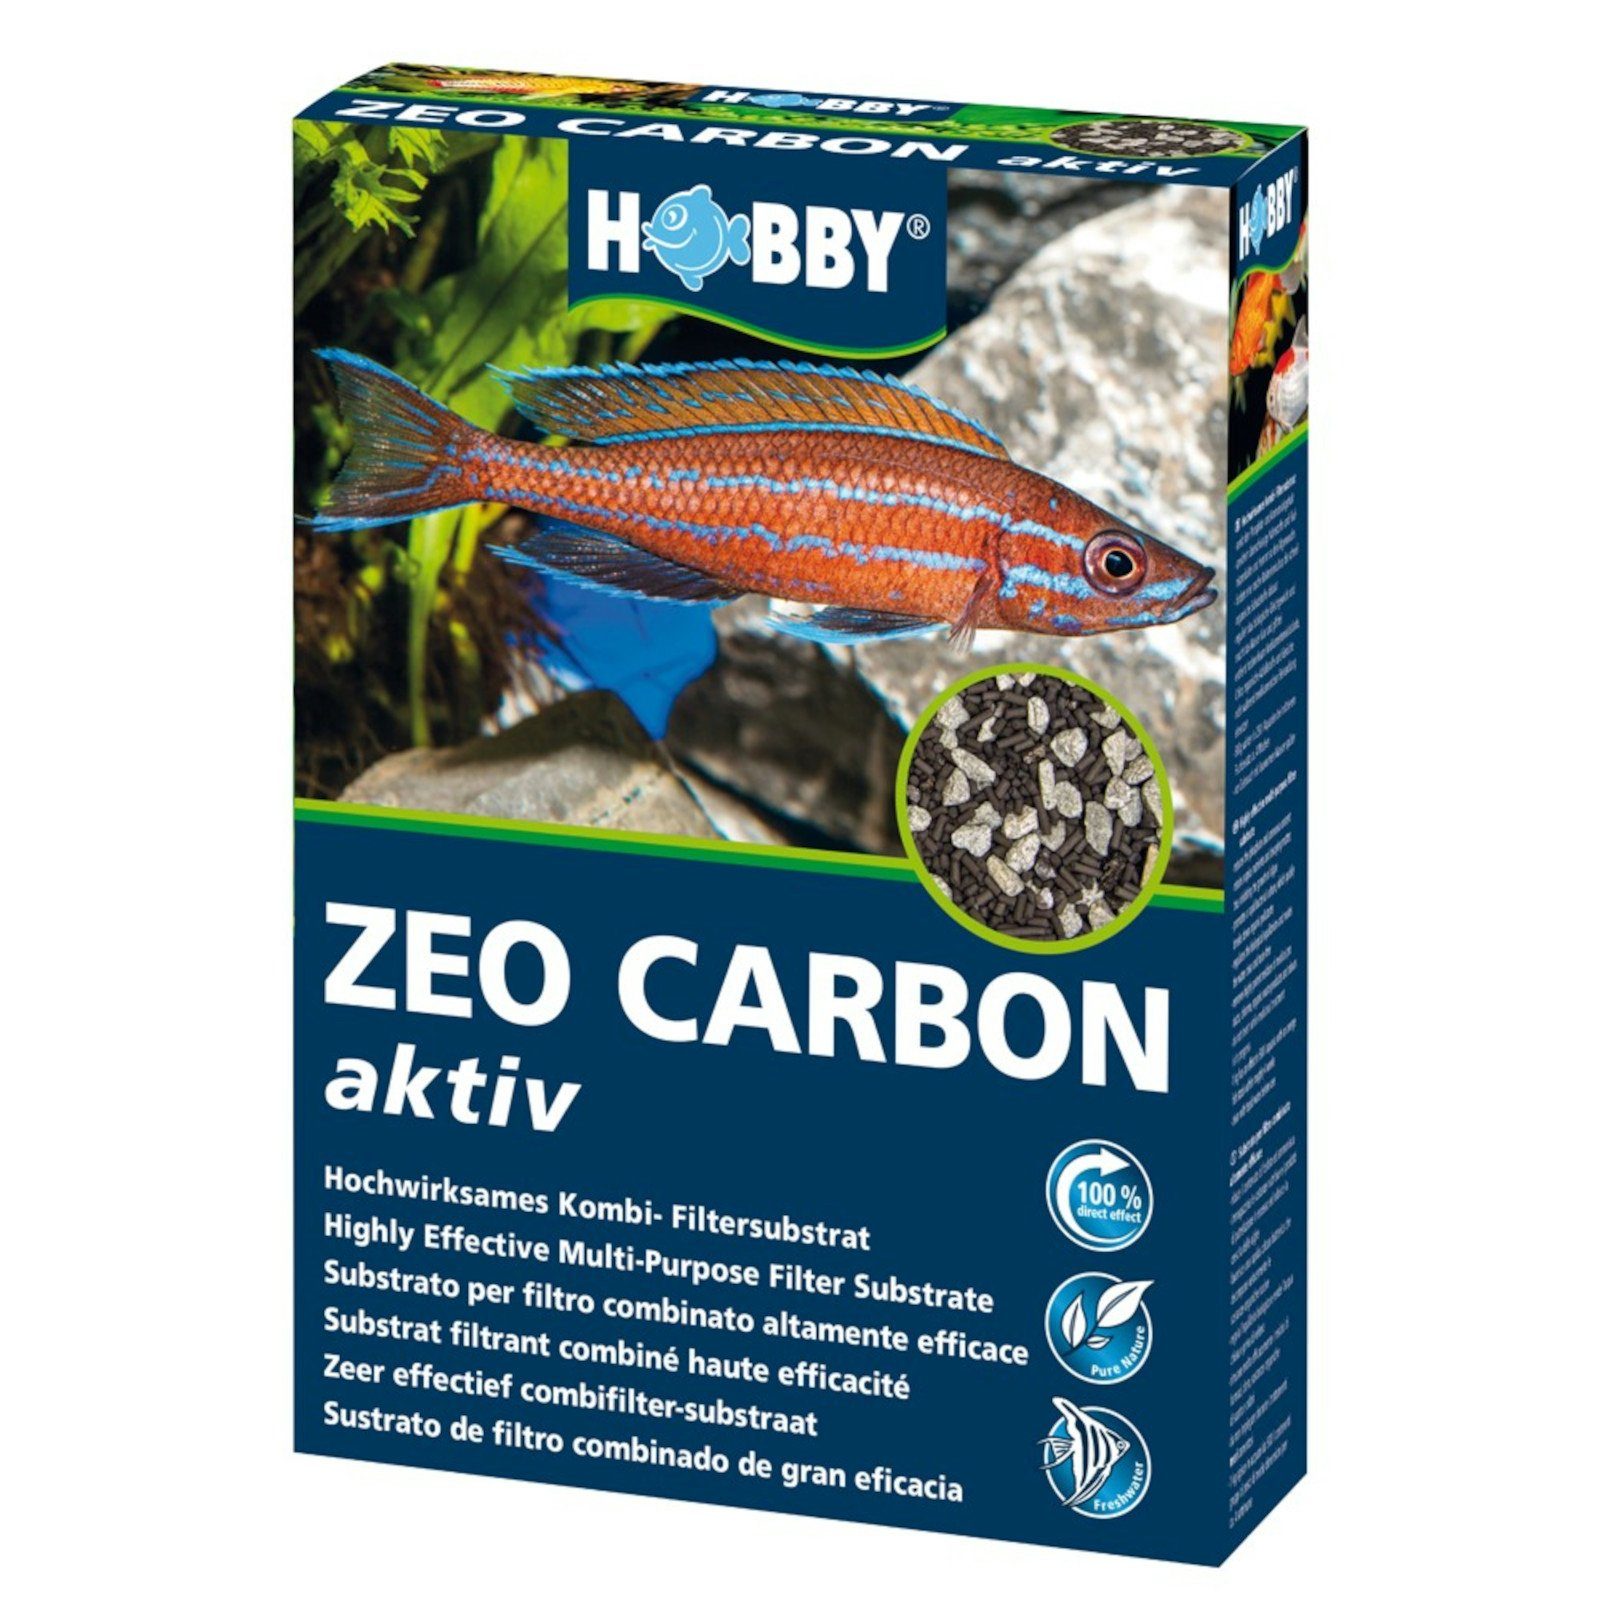 HOBBY Filtersubstrat Zeo Carbon aktiv 500 g - hochwirksames Kombi-Filtersubstrat